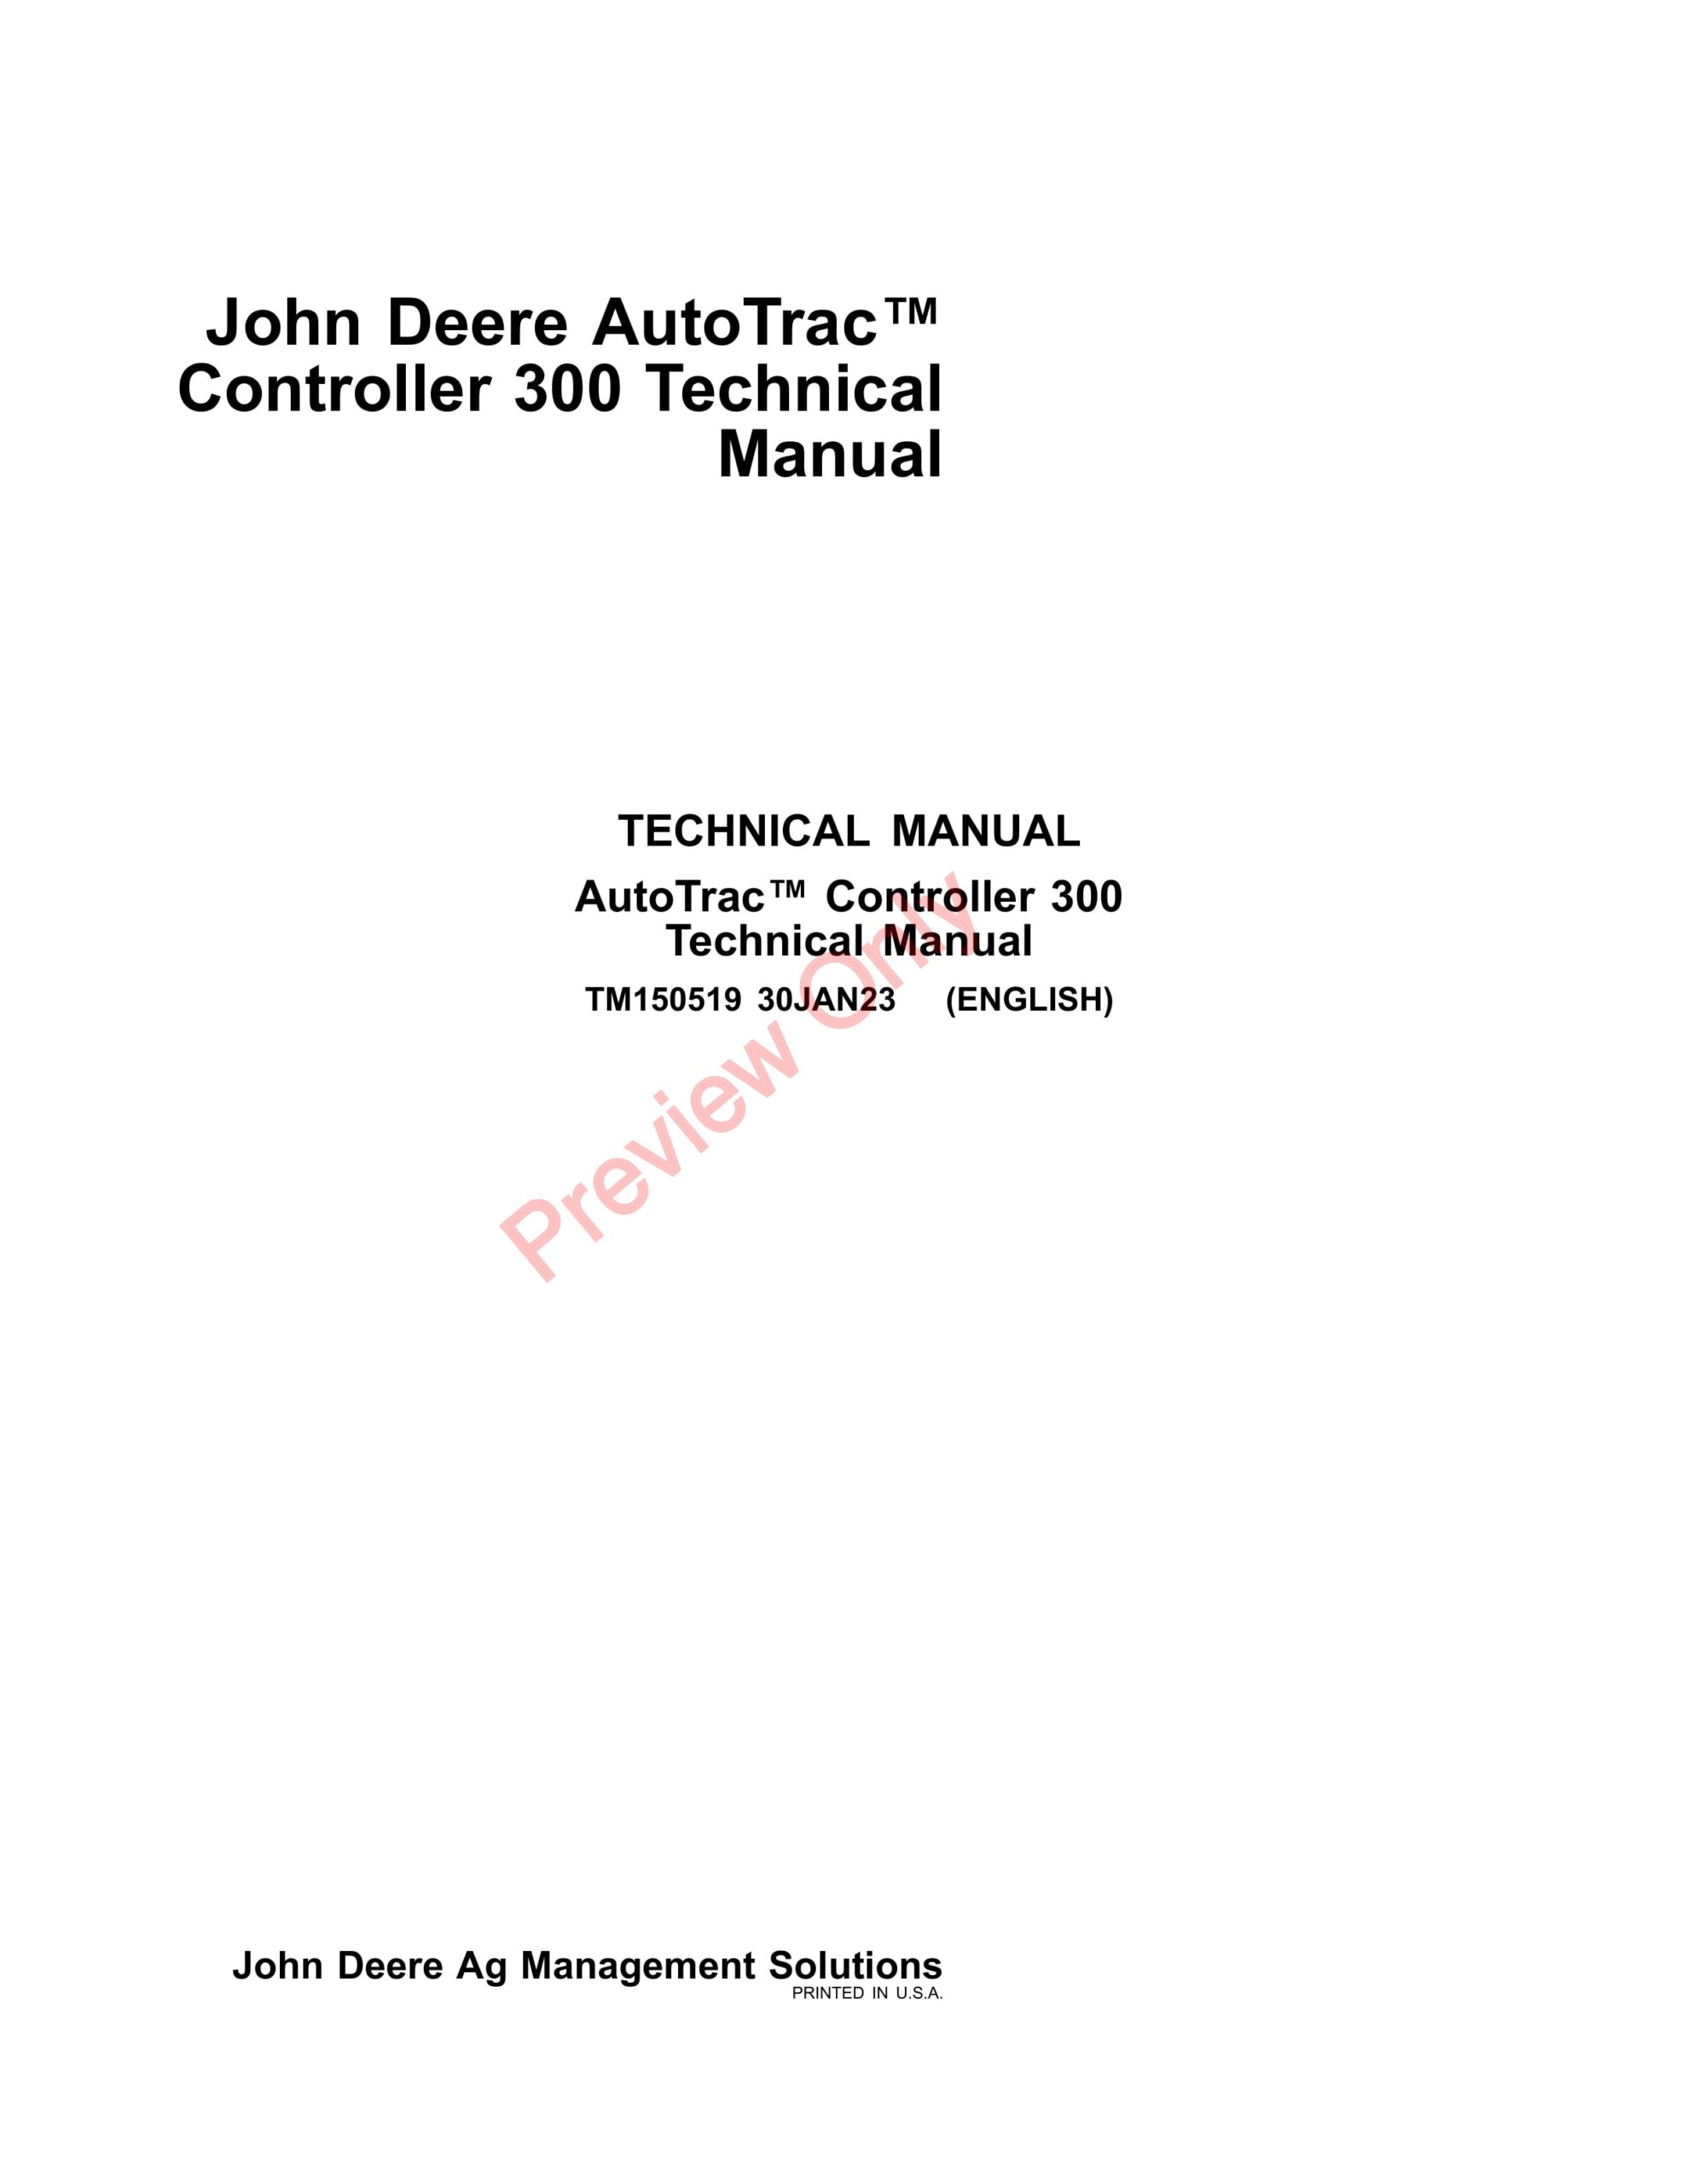 John Deere AutoTrac Controller 300 Technical Manual TM150519 30JAN23-1